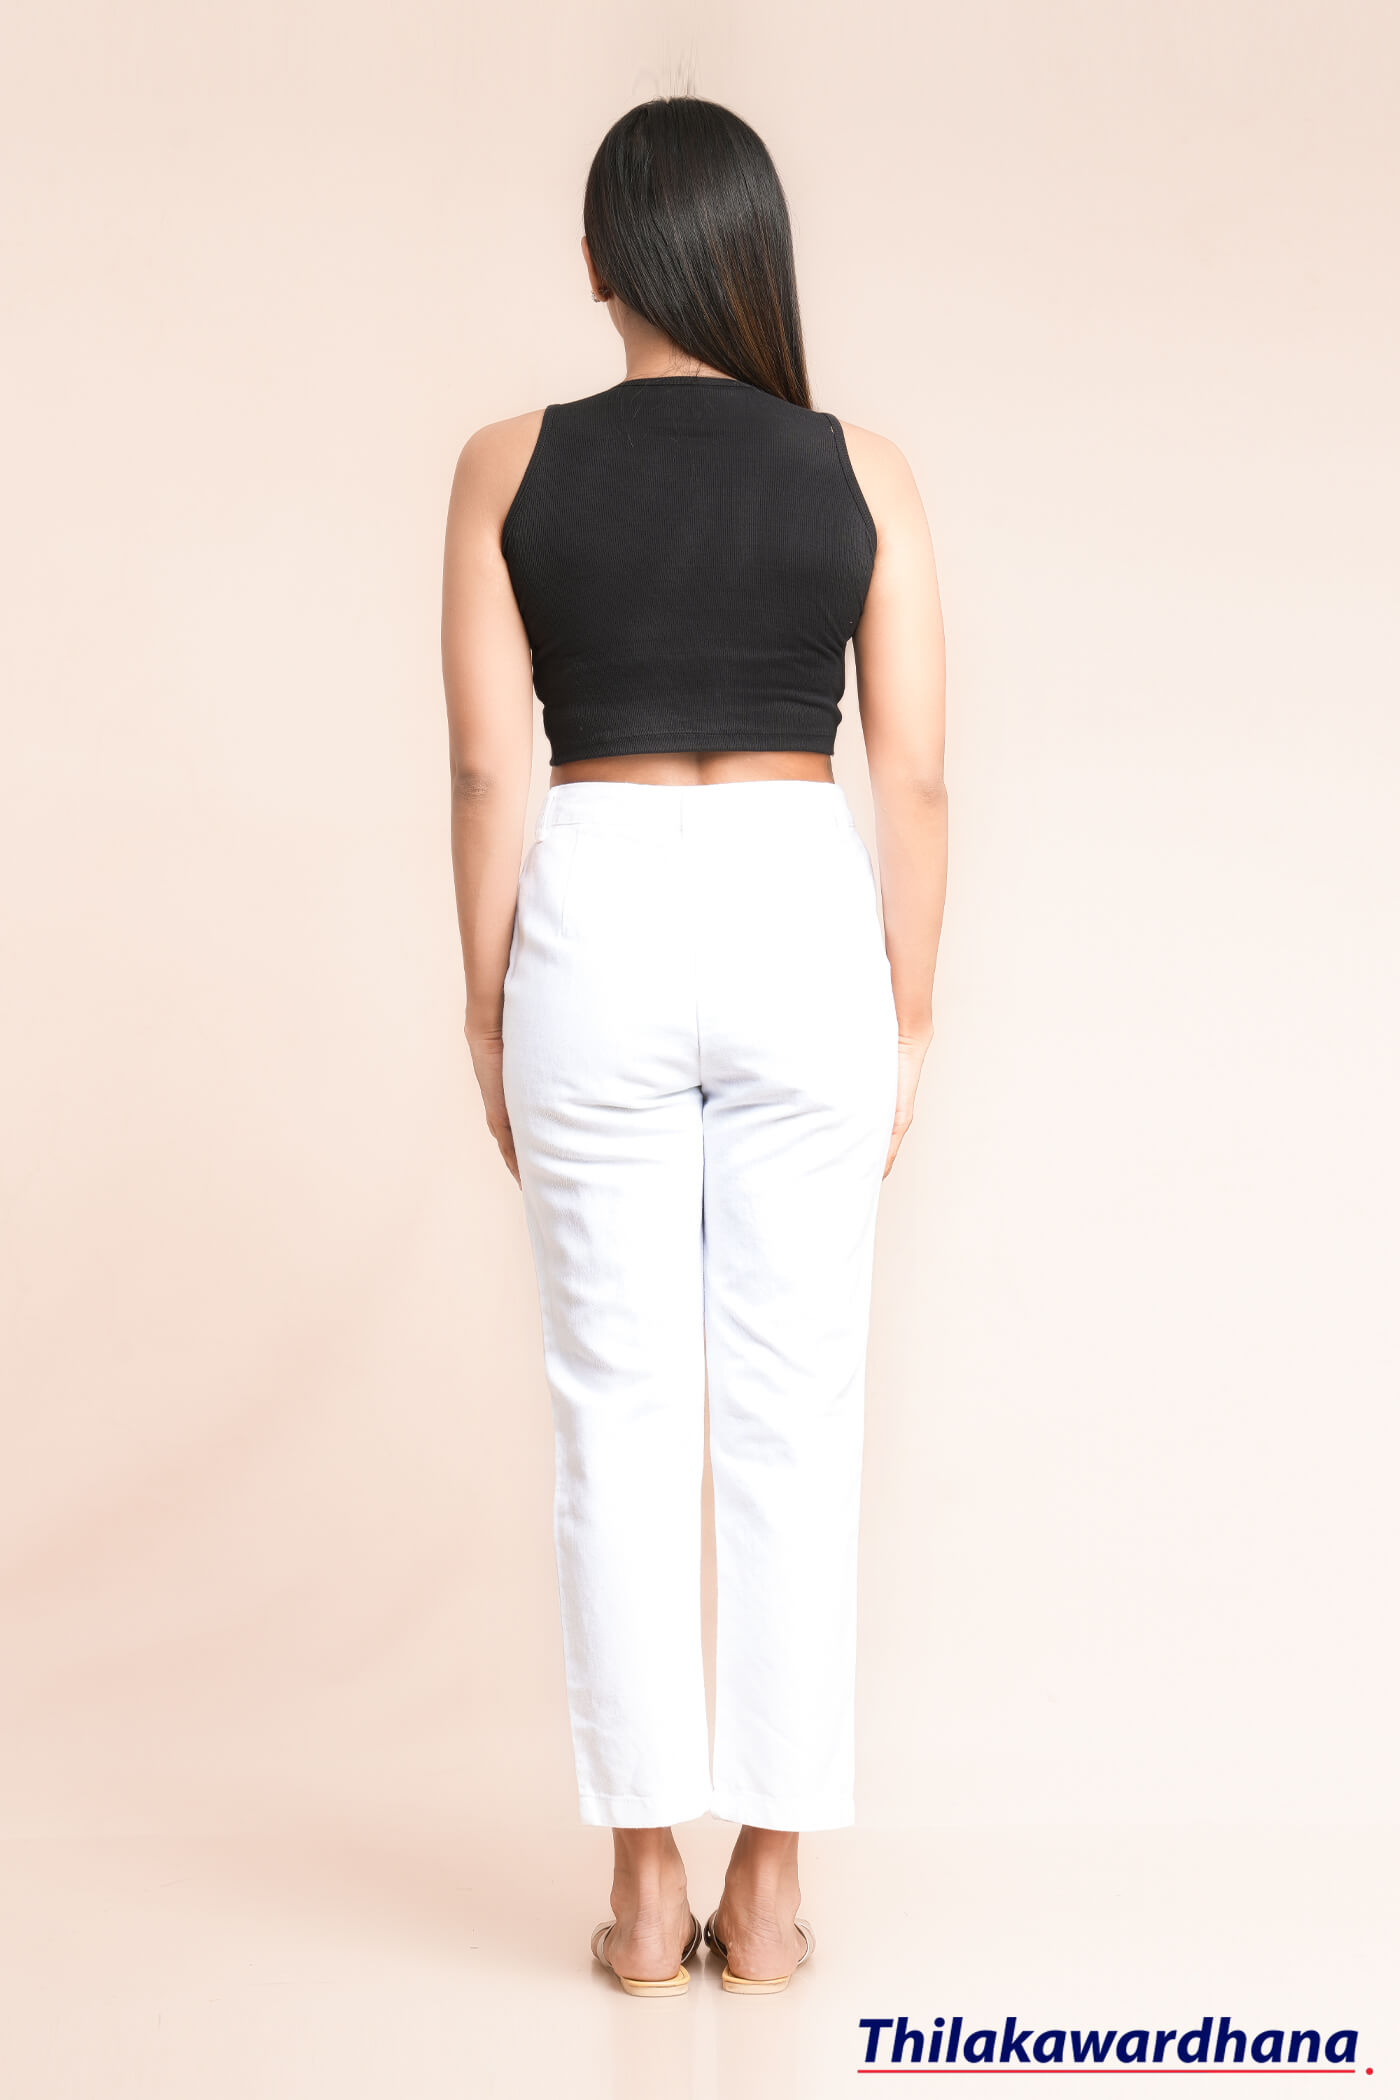 Women's Tapered Fit High Waist Pleated Original Khaki Pants – Dockers®